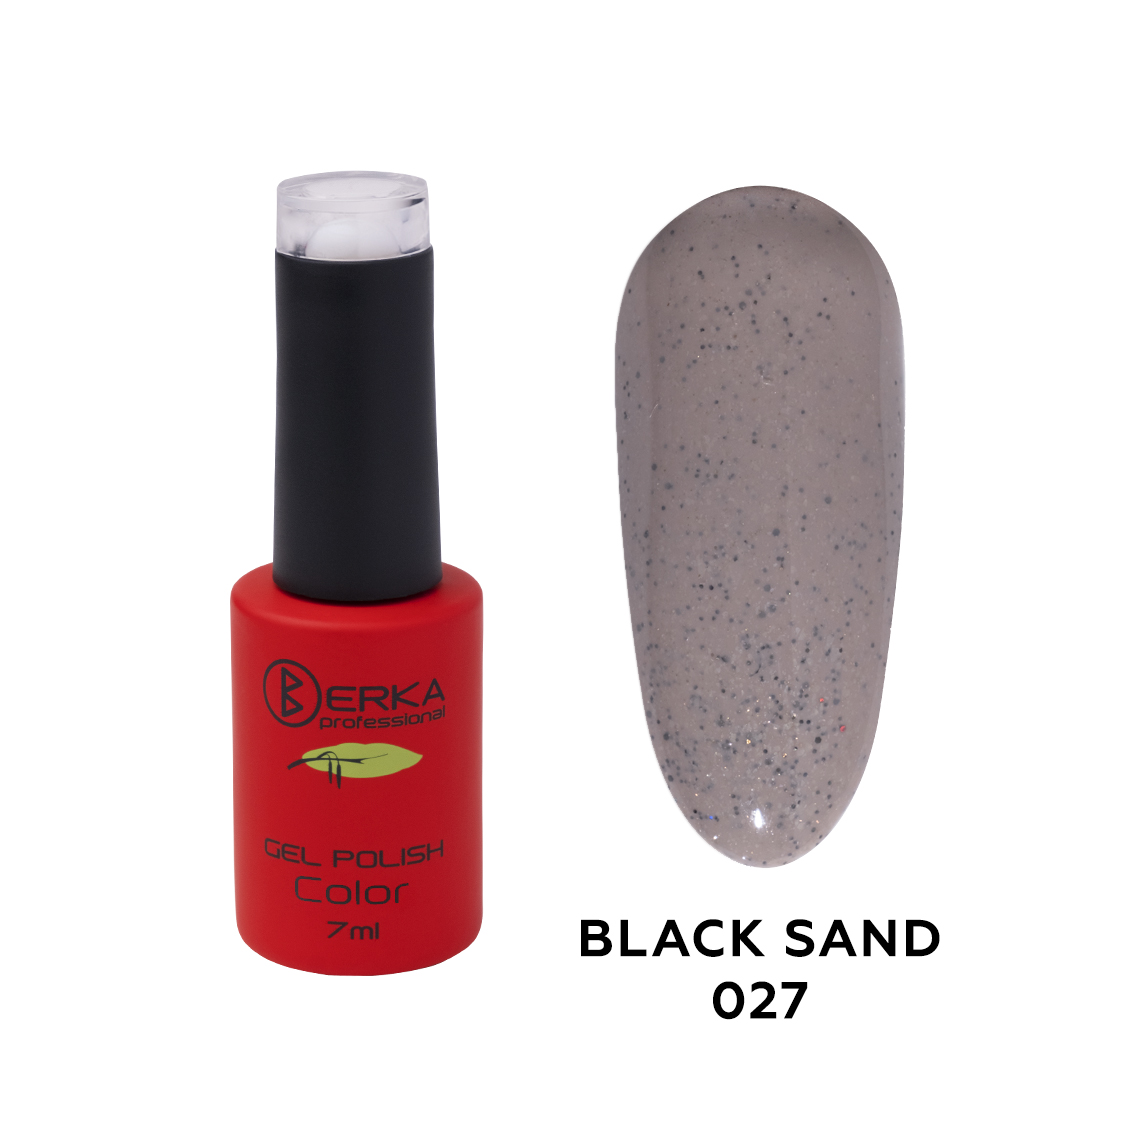 Гель-лак Black Sand №027 7мл Berka